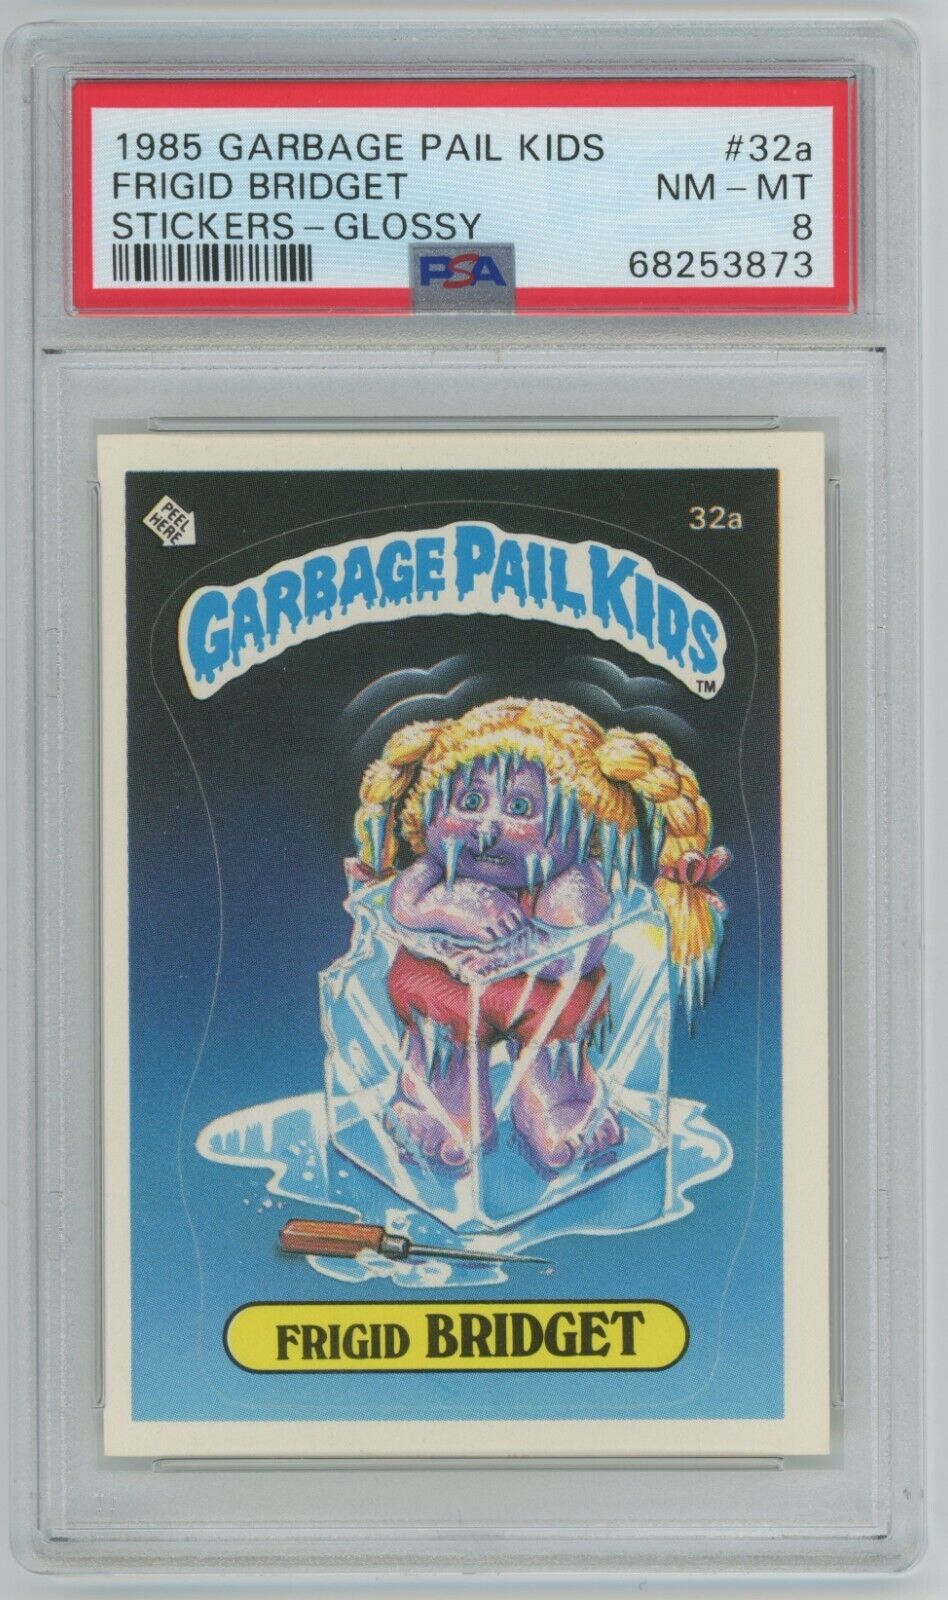 1985 Topps Garbage Pail Kids OS1 Series 1 FRIGID BRIDGET 32a GLOSSY Card PSA 8